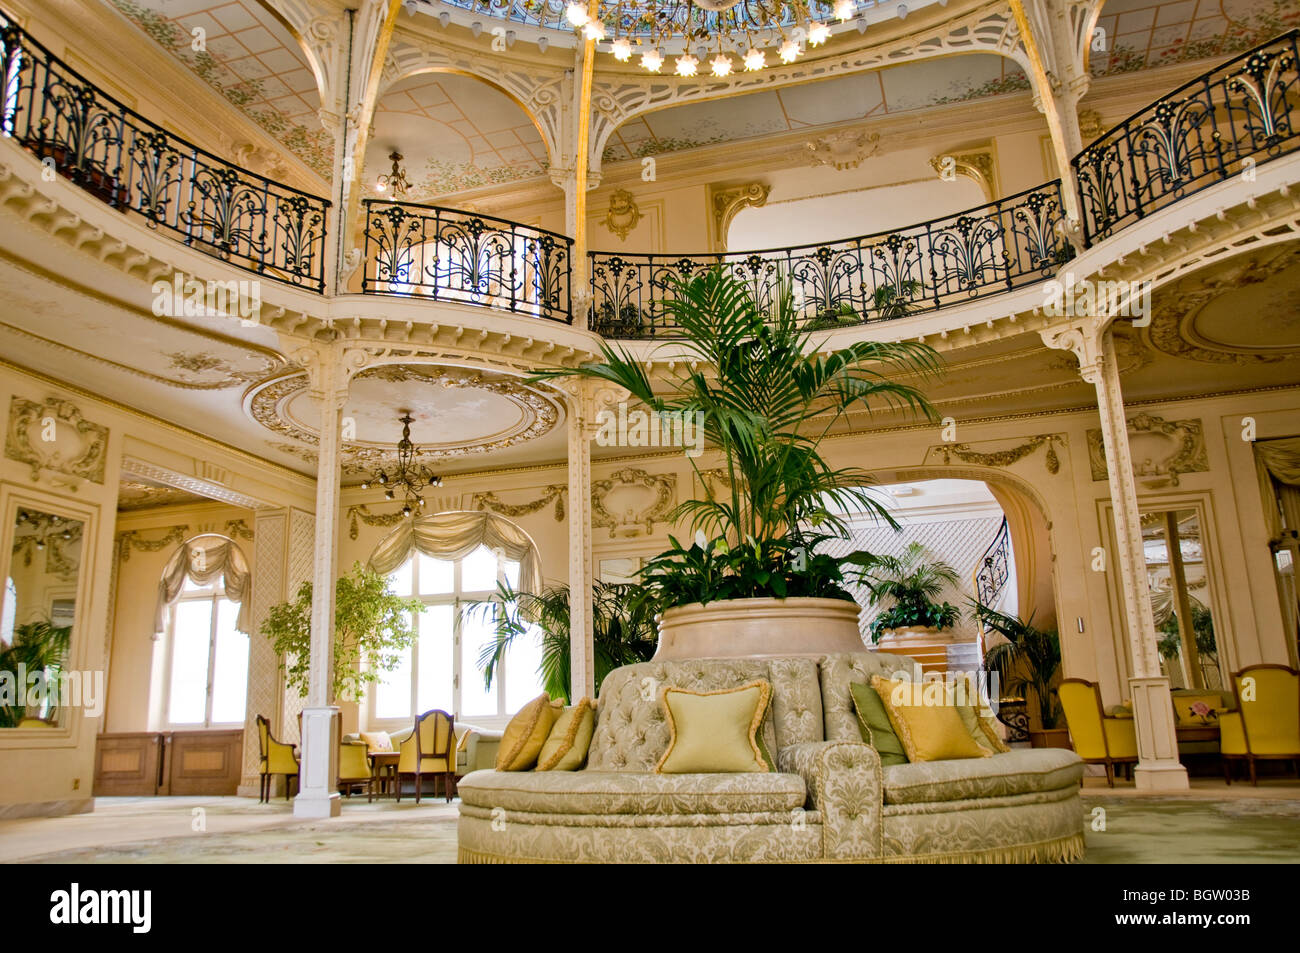 Monte Carlo, Monaco, Luxury Travel, Hermitage Hotel, Inside Atrium, Winter garden, Designed by Eiffel, fancy hotel interior Stock Photo